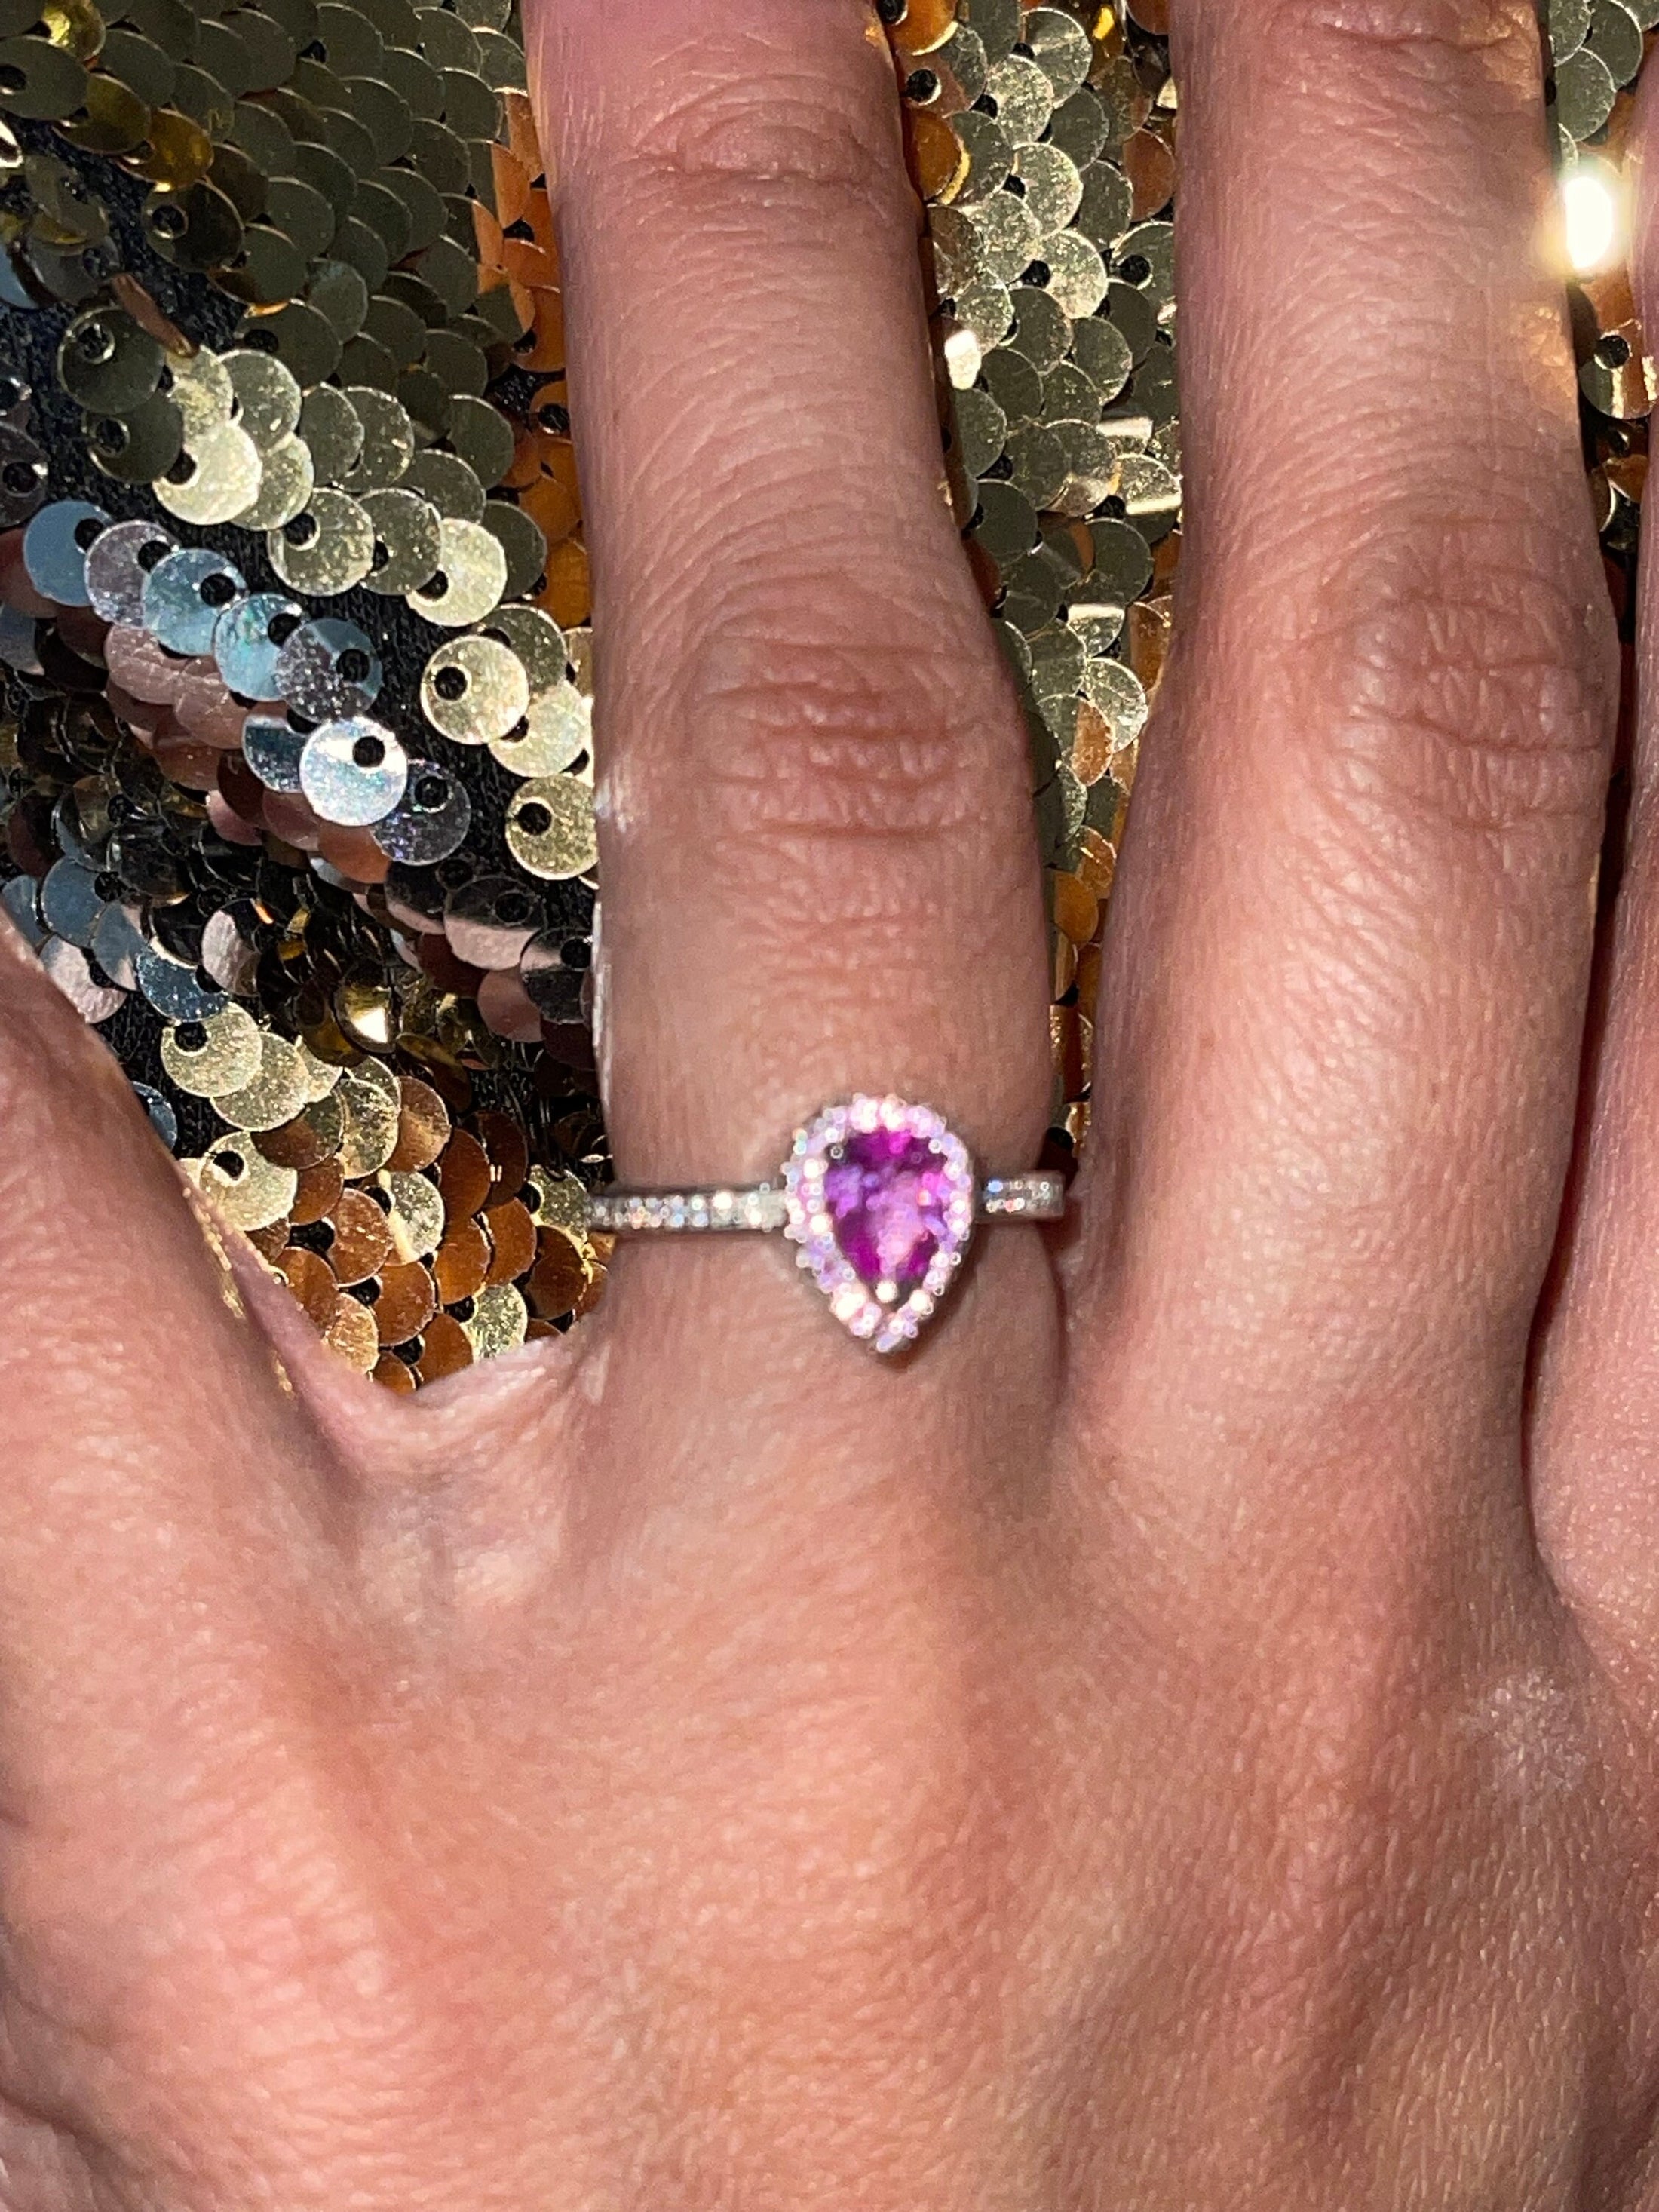 Pink Crystal Urn Ring, Cremation Ring for Ashes, Ash Holder ring, Memorial Keepsake urn ring, Urn jewelry, Pet/Human Ash holder, Beautiful